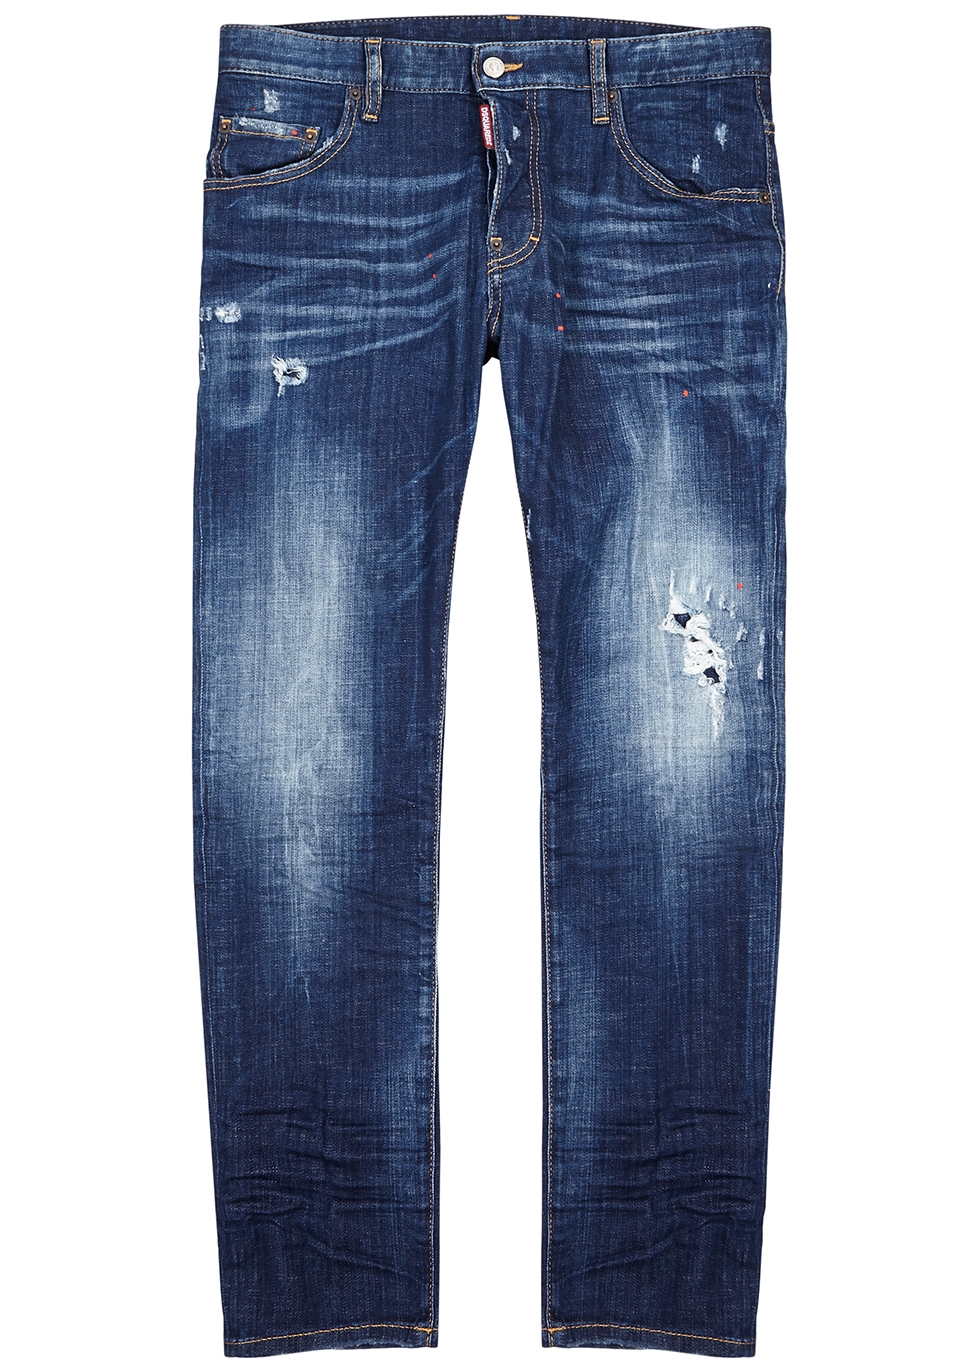 h&m slim jeans mens